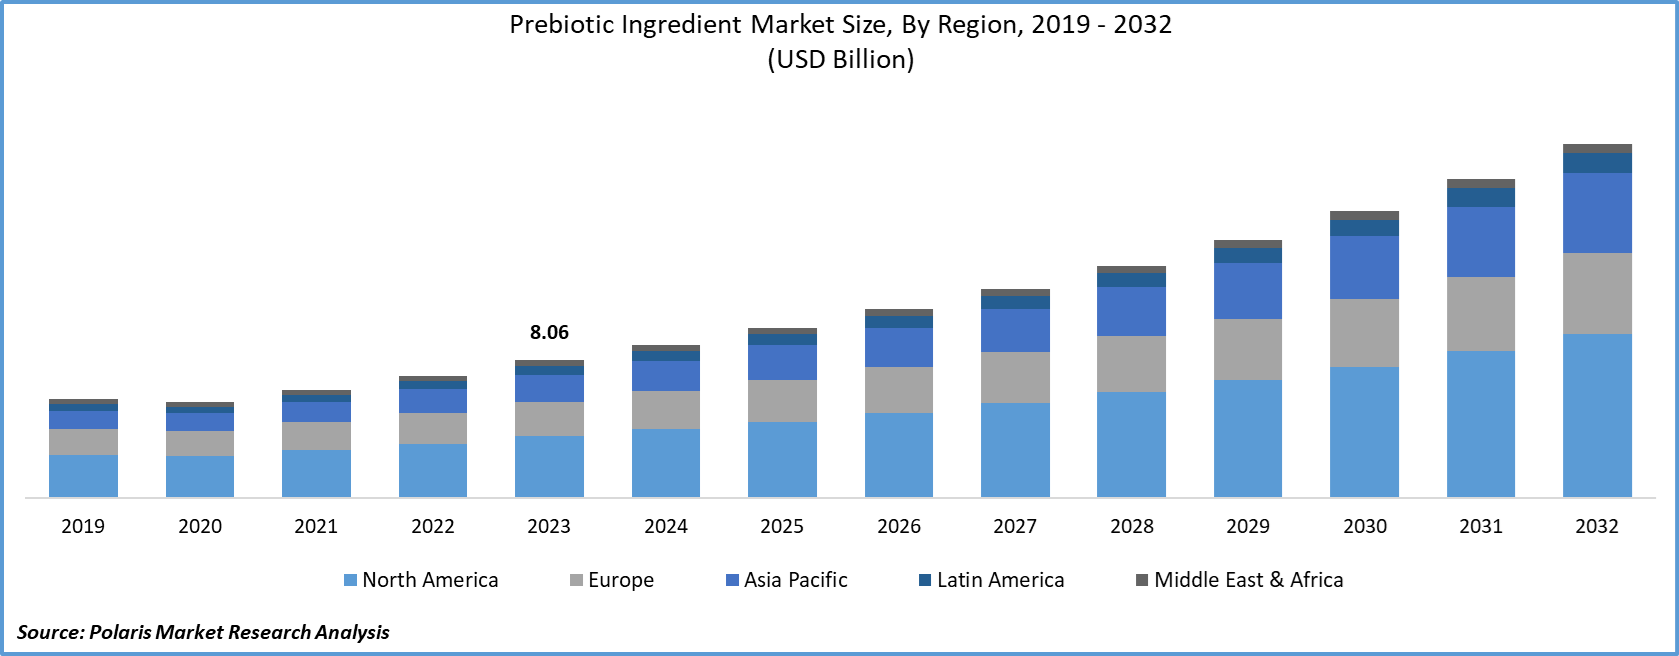 Prebiotic Ingredients Market Size